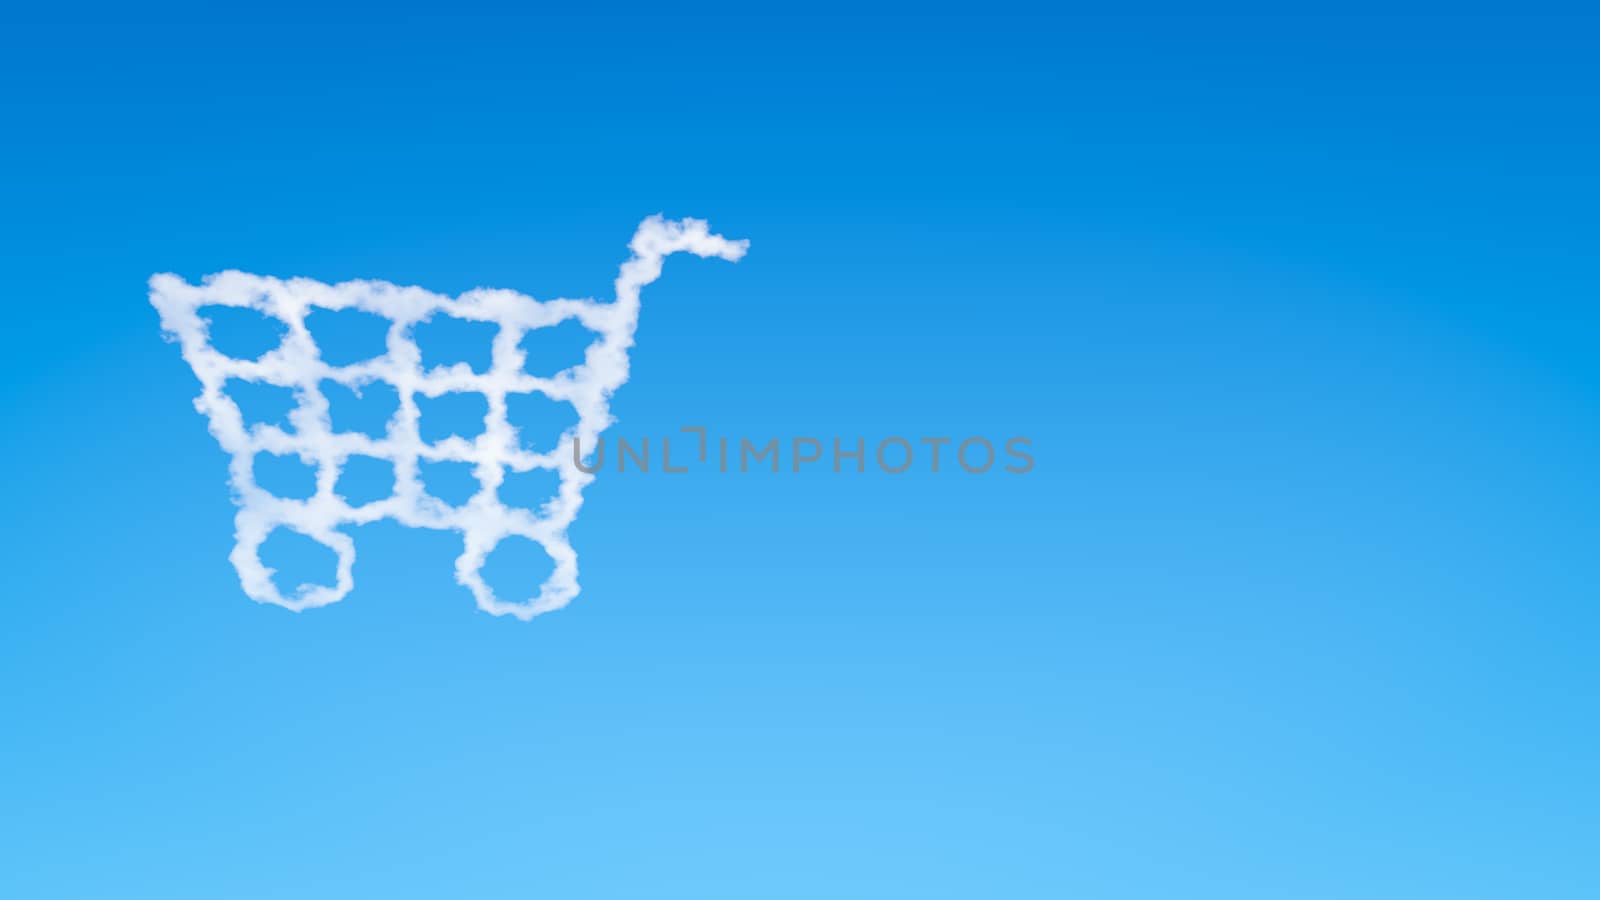 Shopping Cart Shaped Cloud by make